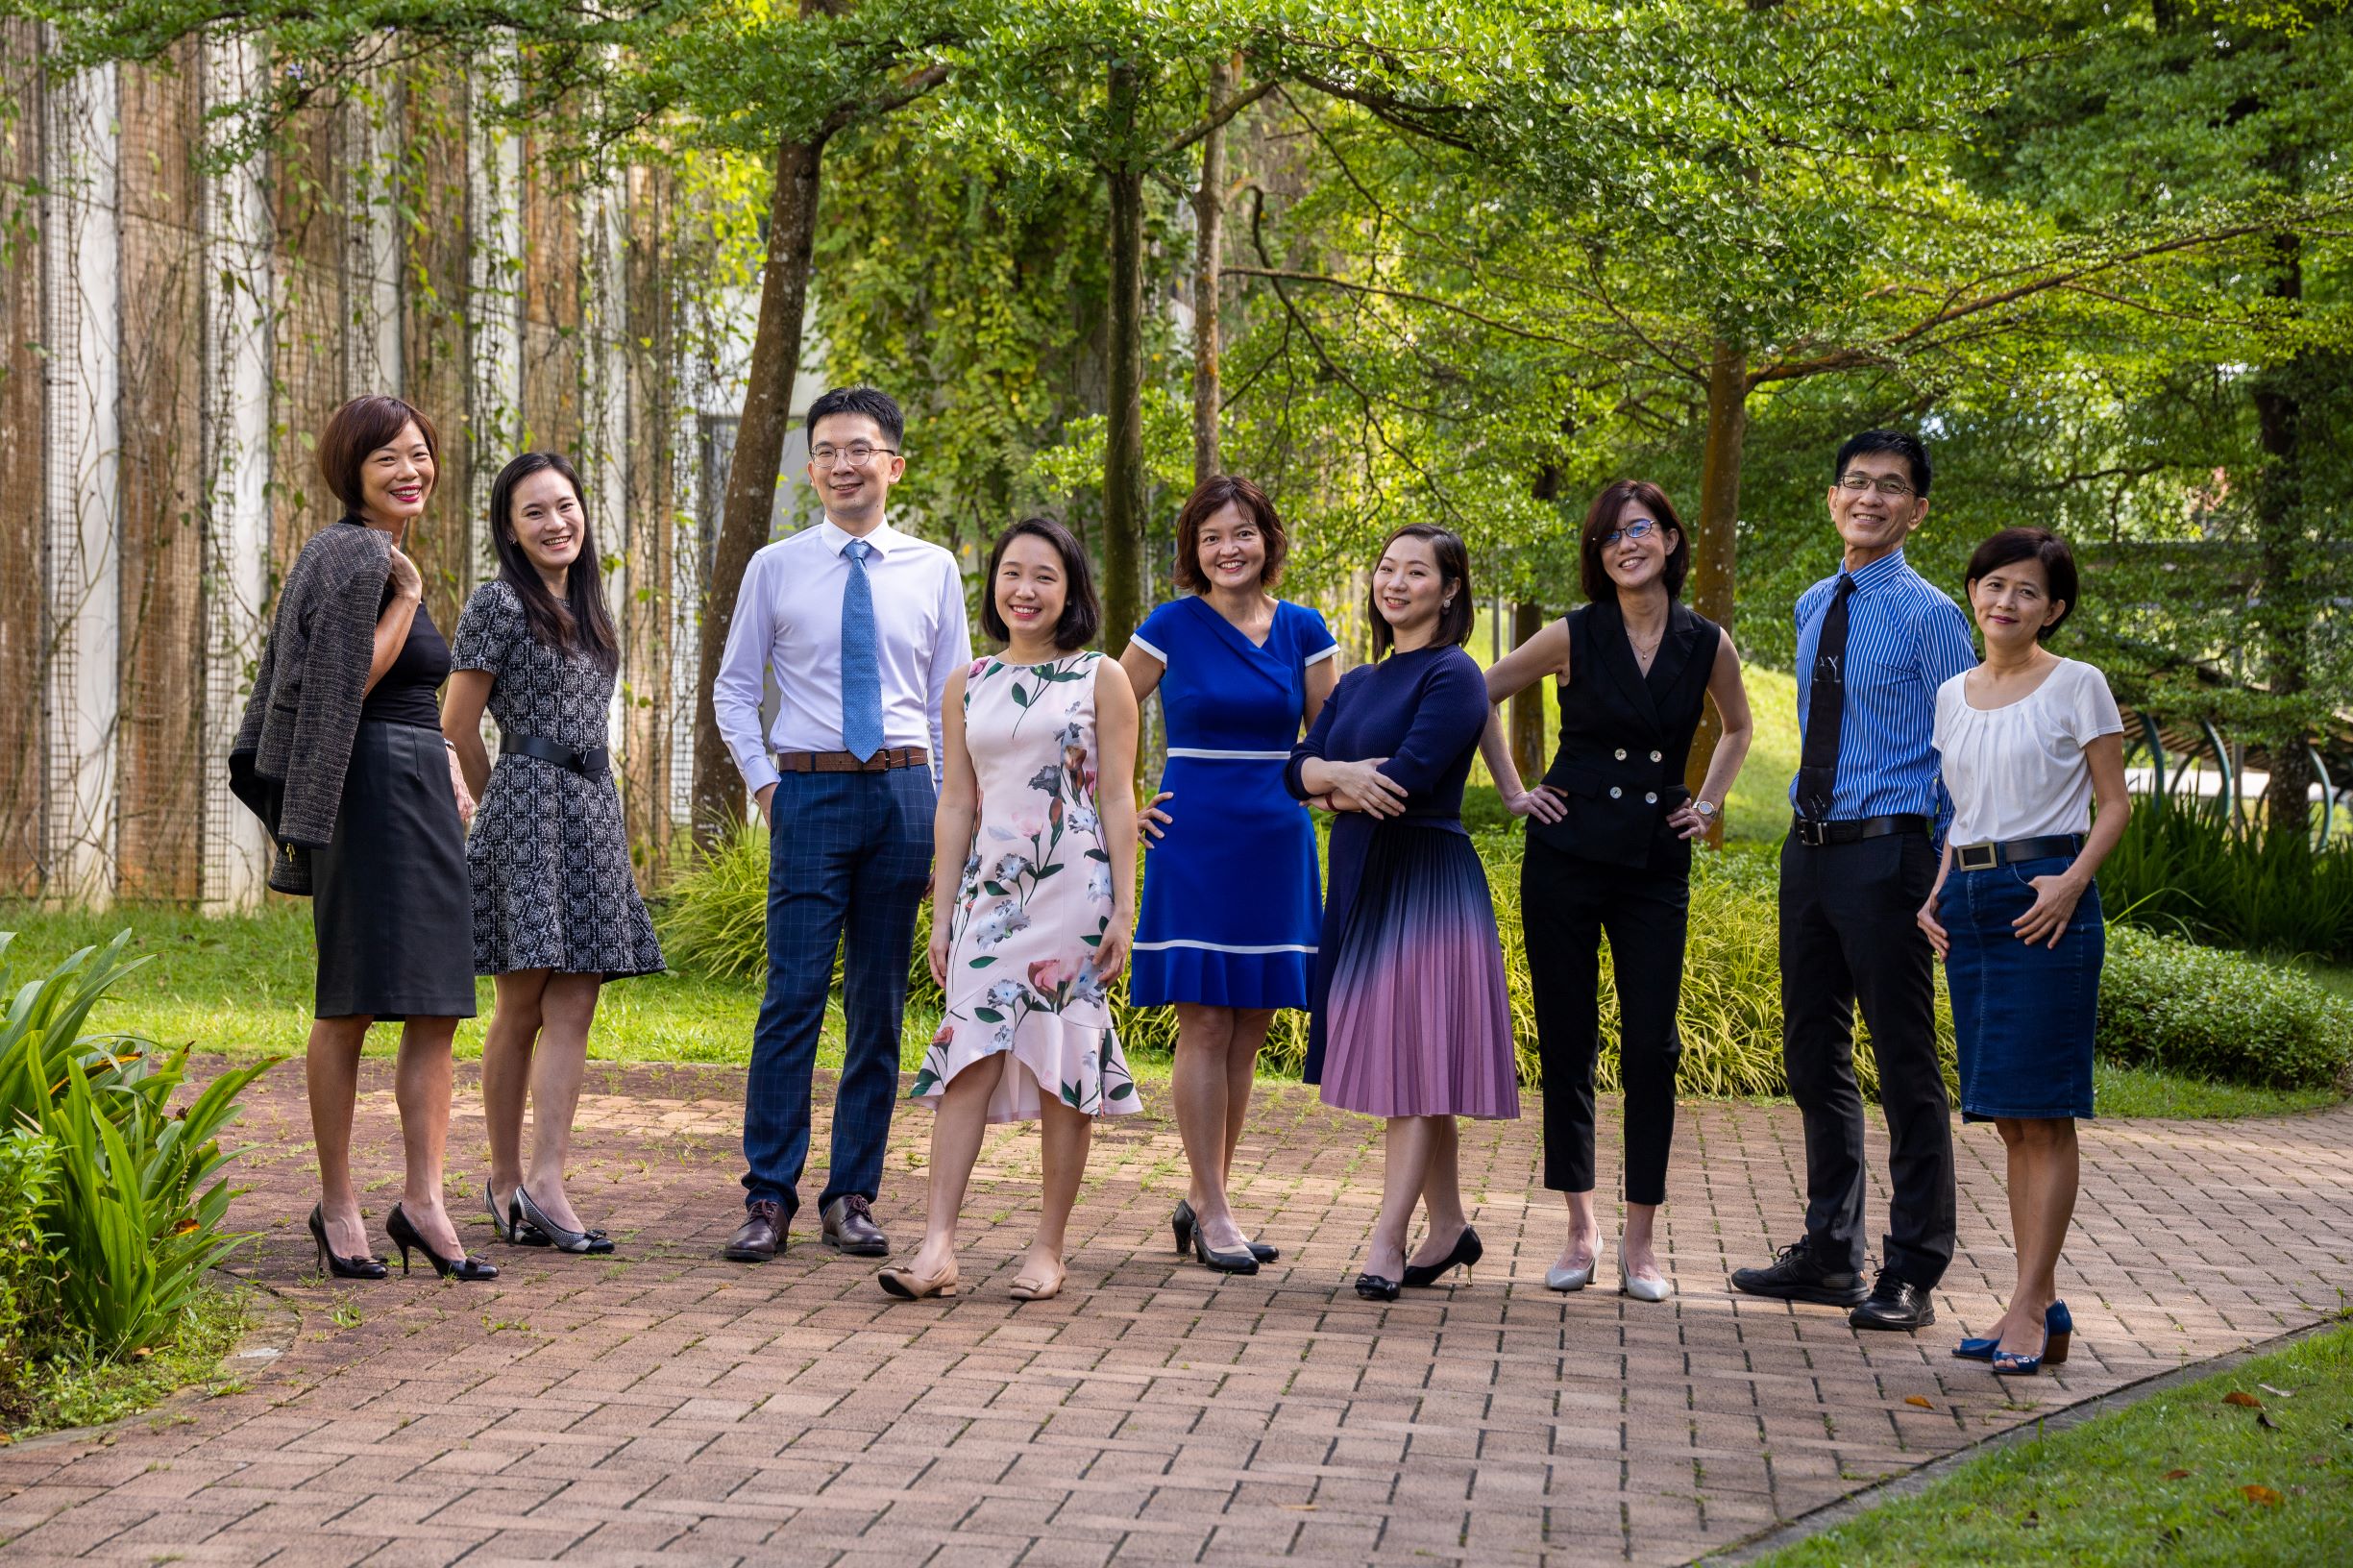 The Graduate Studies Career Development Office team